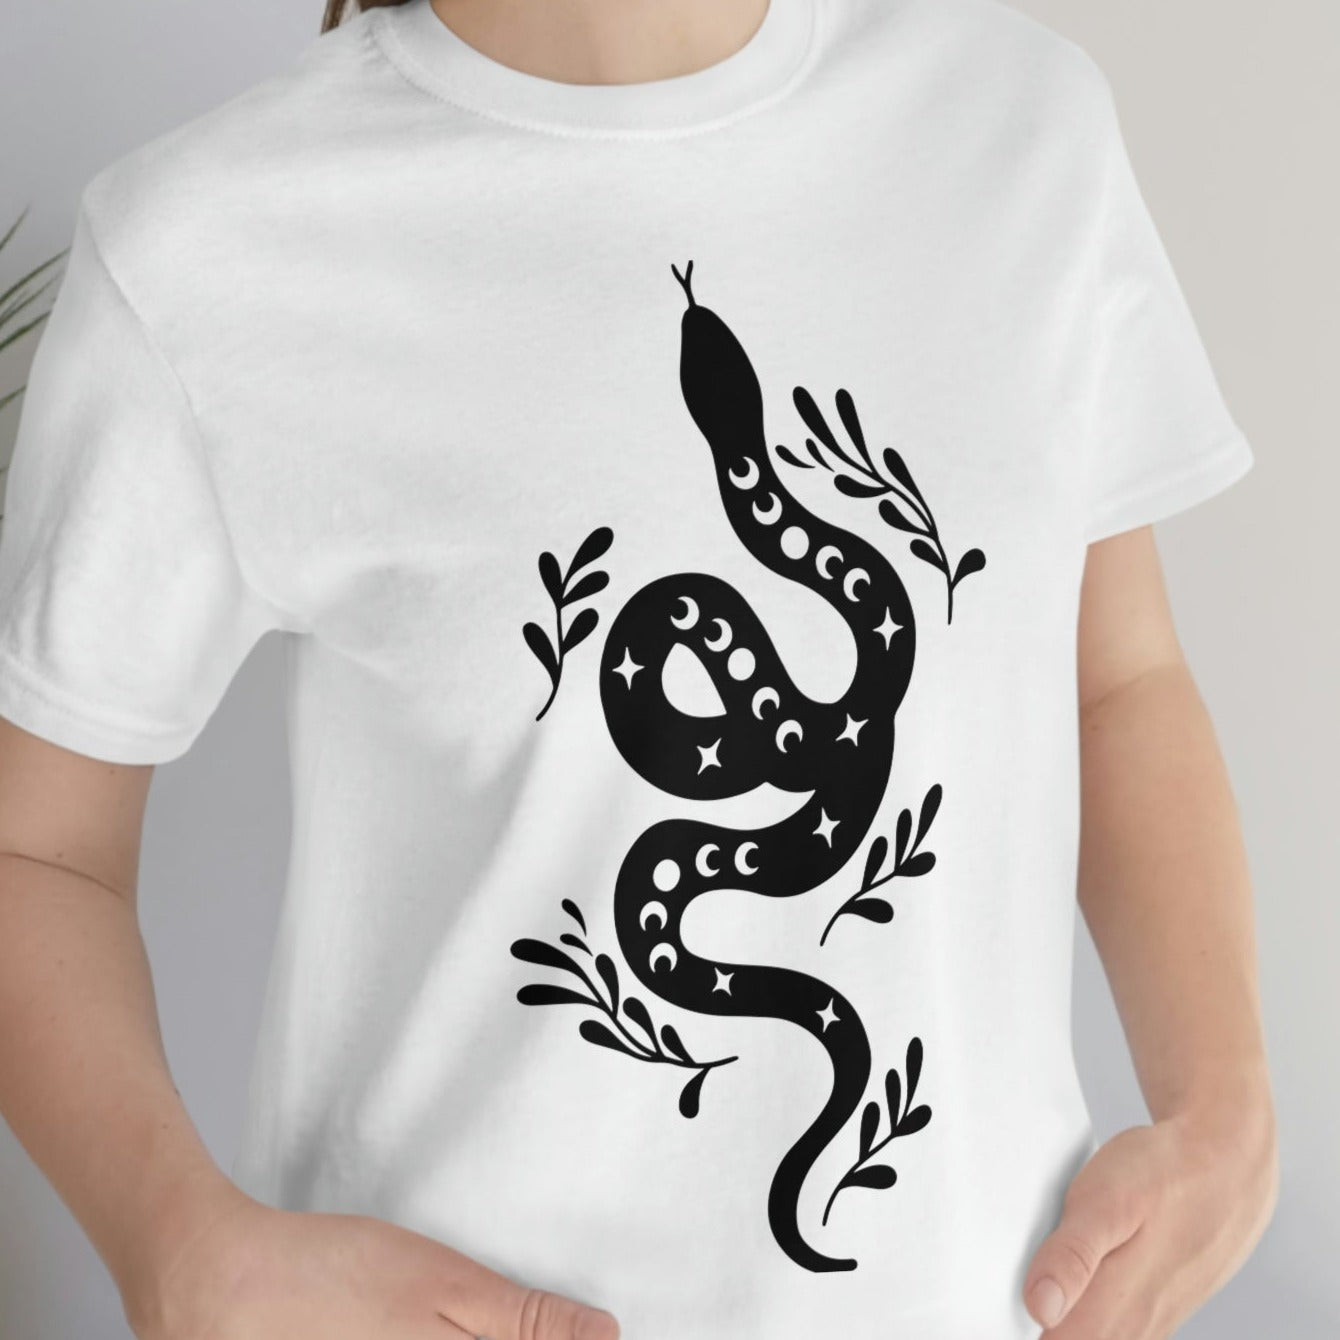 Celestial snake witchy cotton tee for women white tshirt